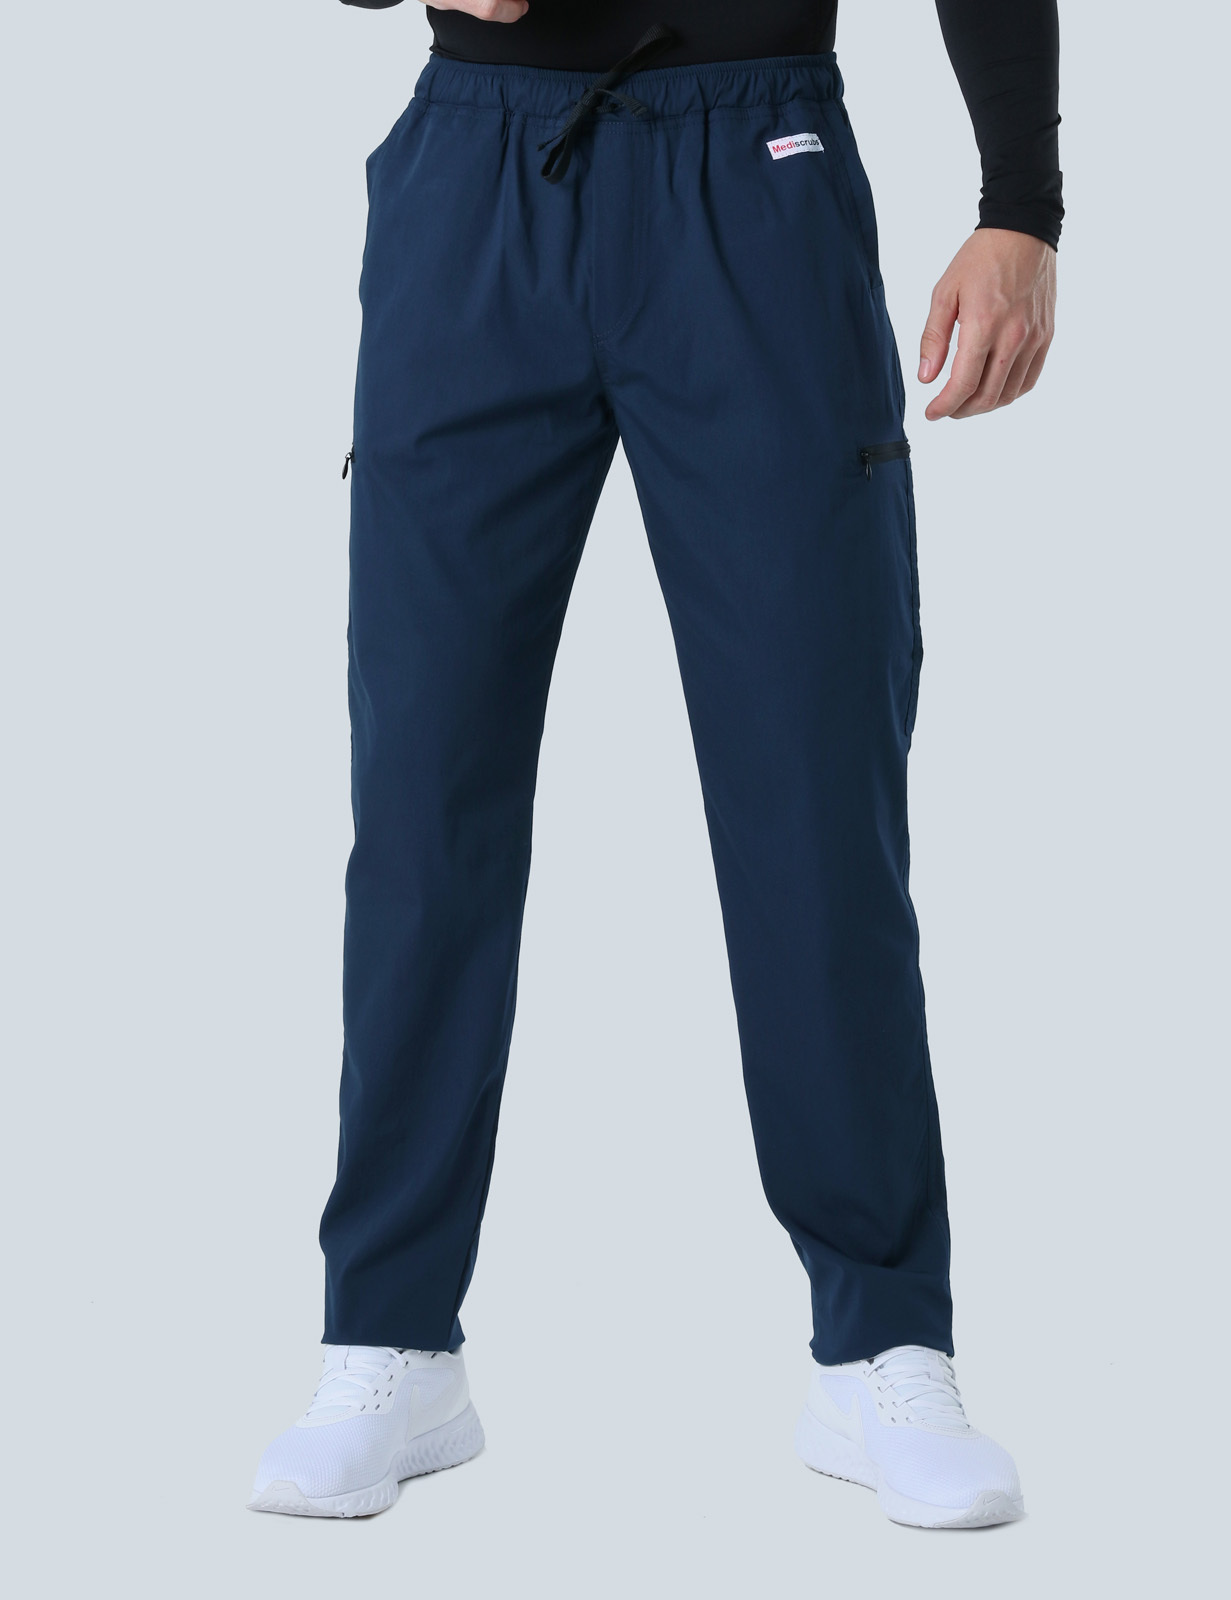 Men's Utility Pants - Navy - Large